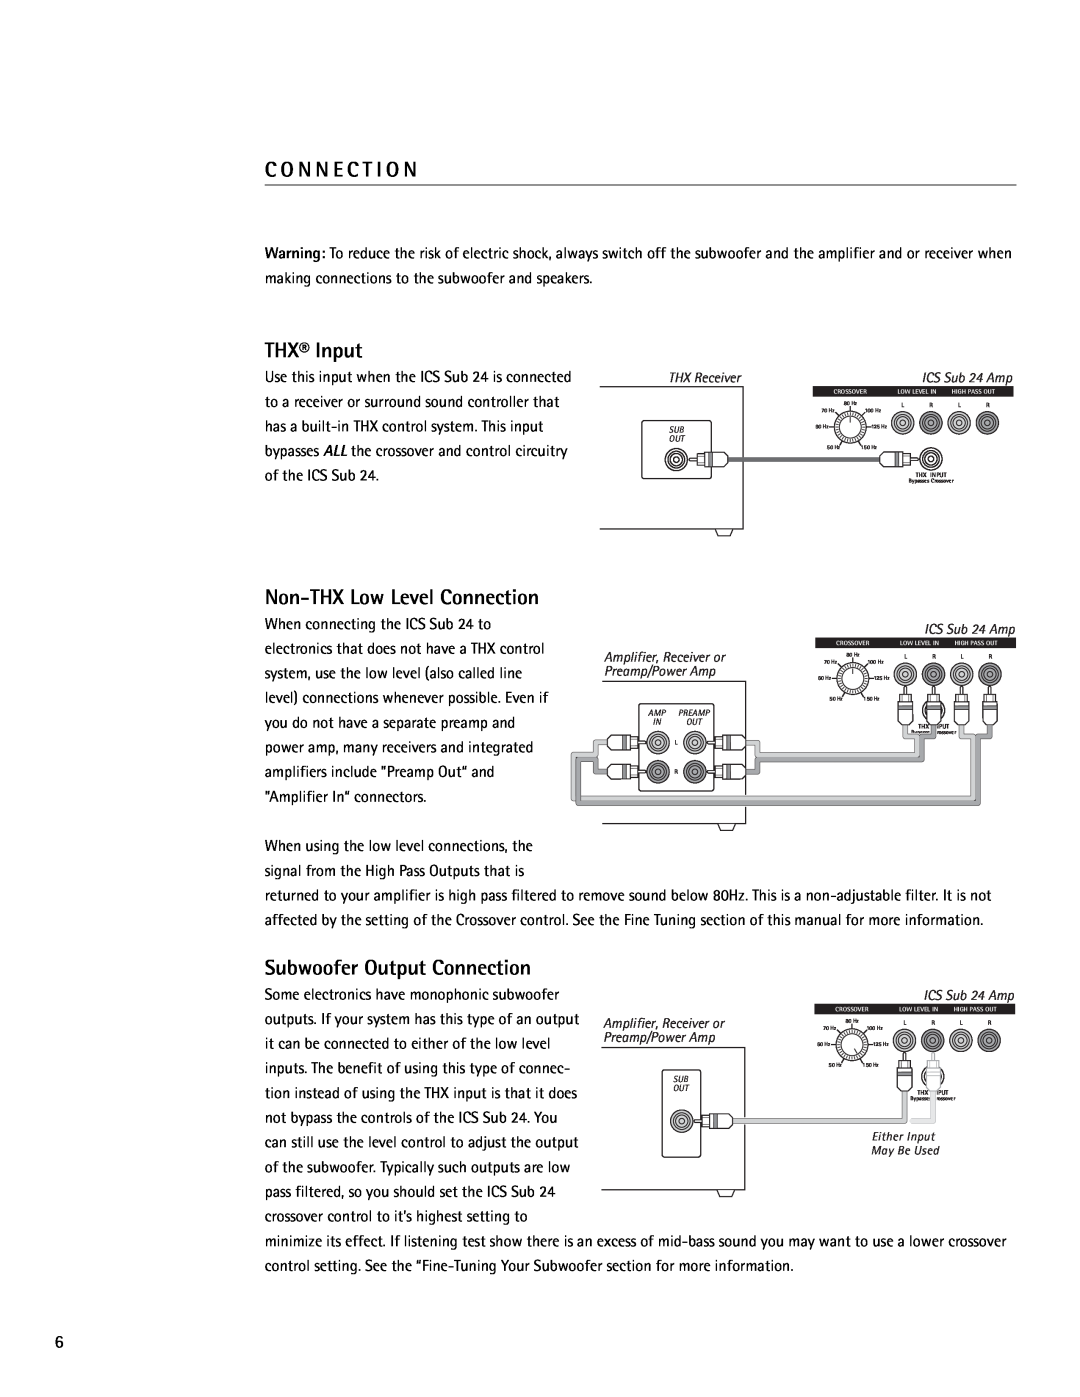 Snell Acoustics ICS Sub 24 C O N N E C T I O N, THX Input, Non-THX Low Level Connection, Subwoofer Output Connection 